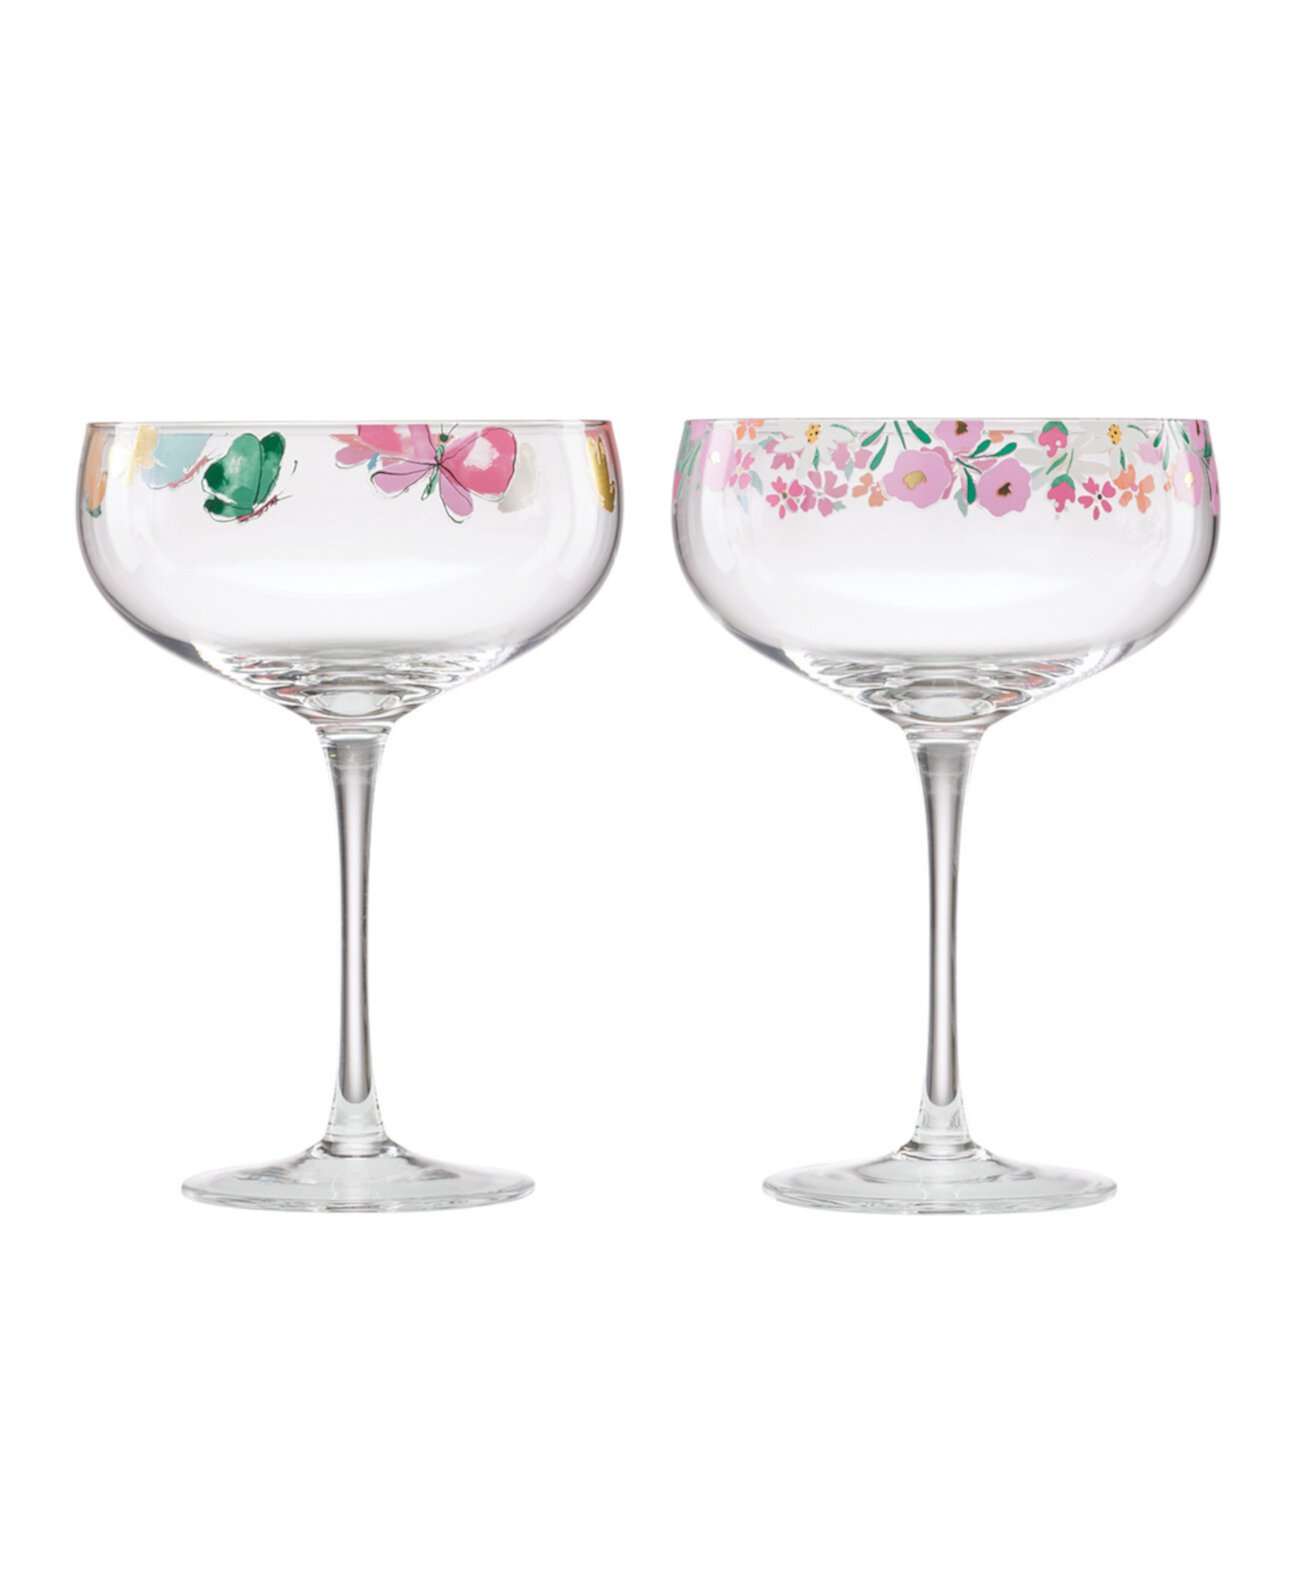 10 oz Floral Brights Coupe Glasses, Set of 2 Cambridge